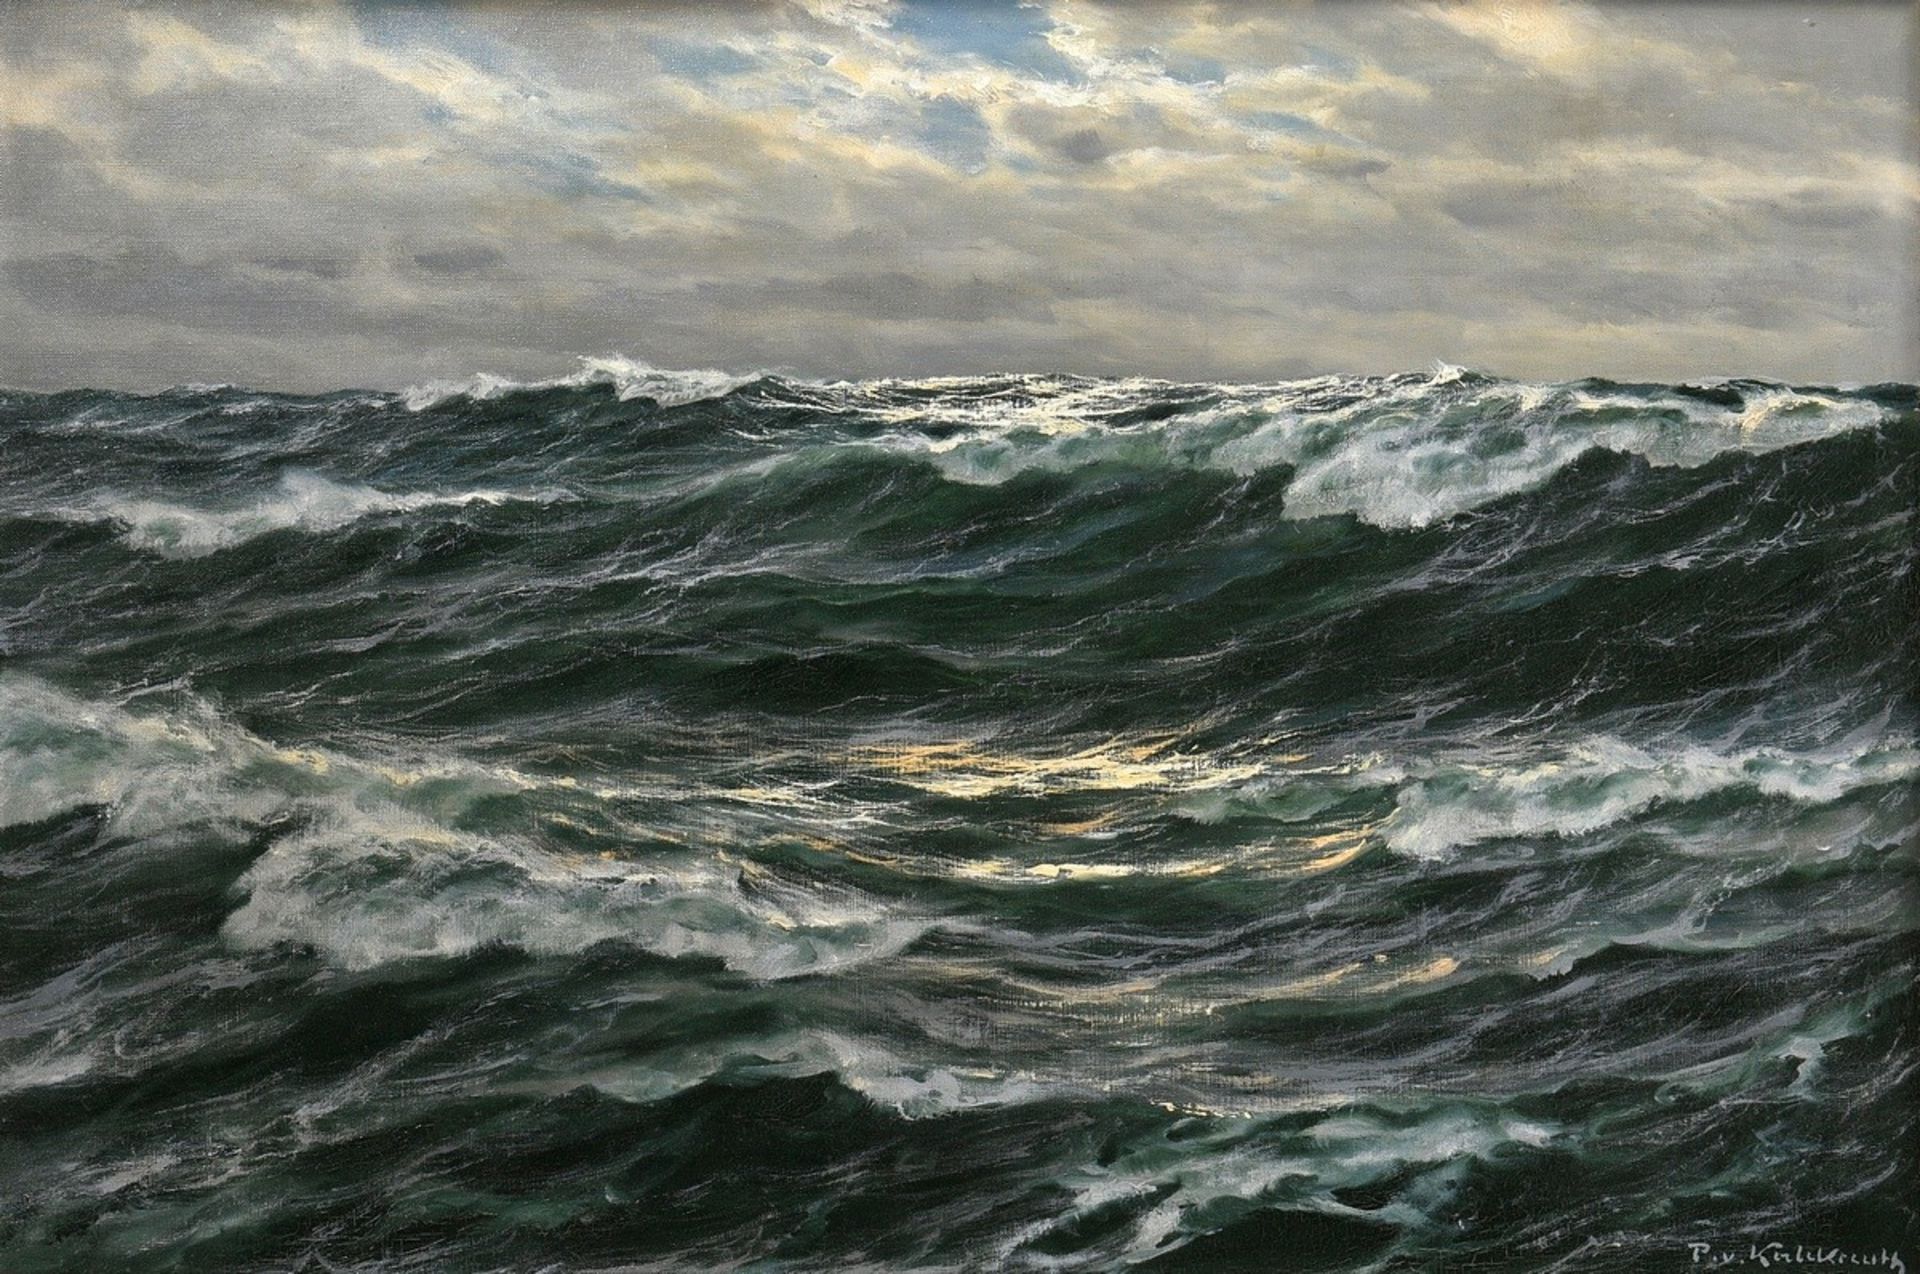 Kalckreuth, Patrick v. (1892-1970) "High Seas", oil/canvas, b.r. sign., verso on stretcher inscr., 